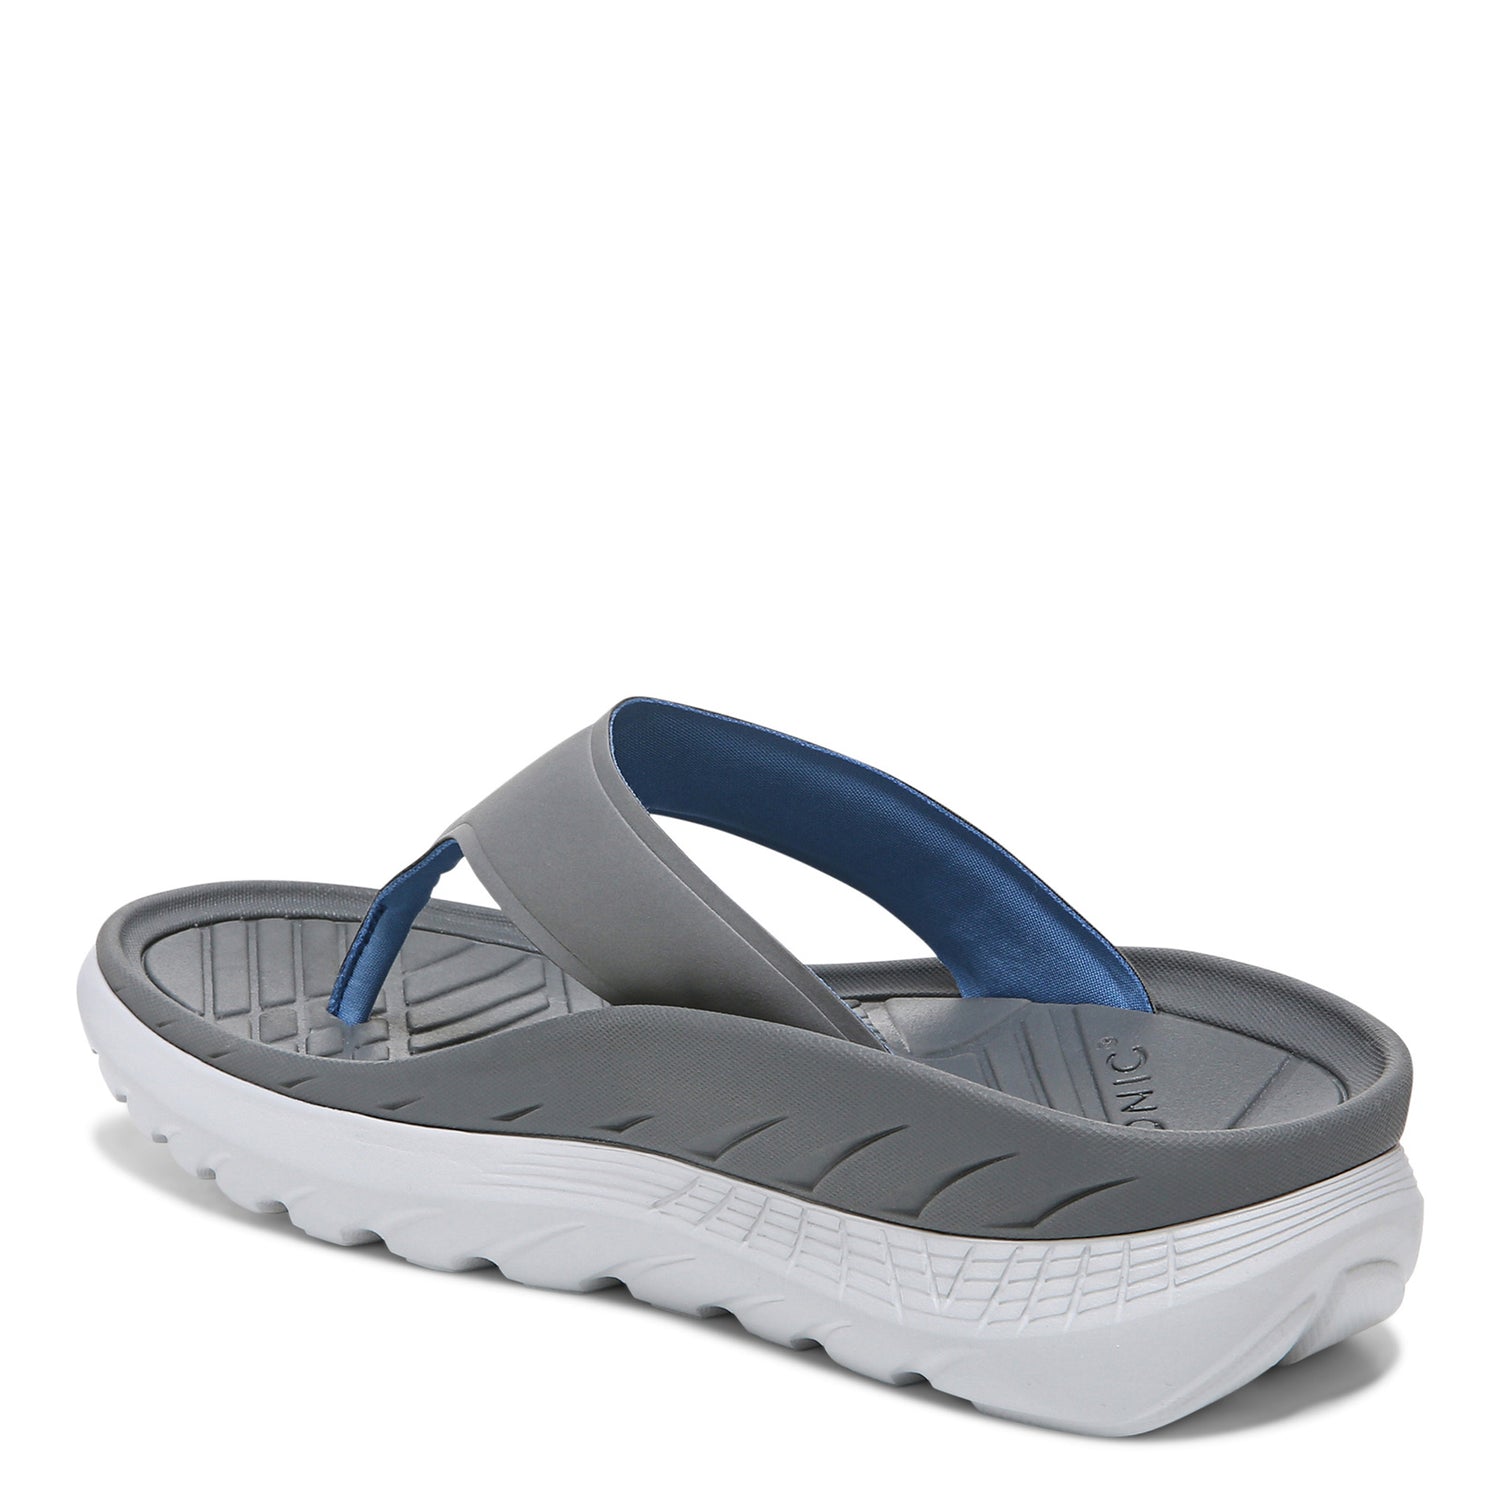 Peltz Shoes  Women's Vionic Restore Sandal CHARCOAL I0900S1020